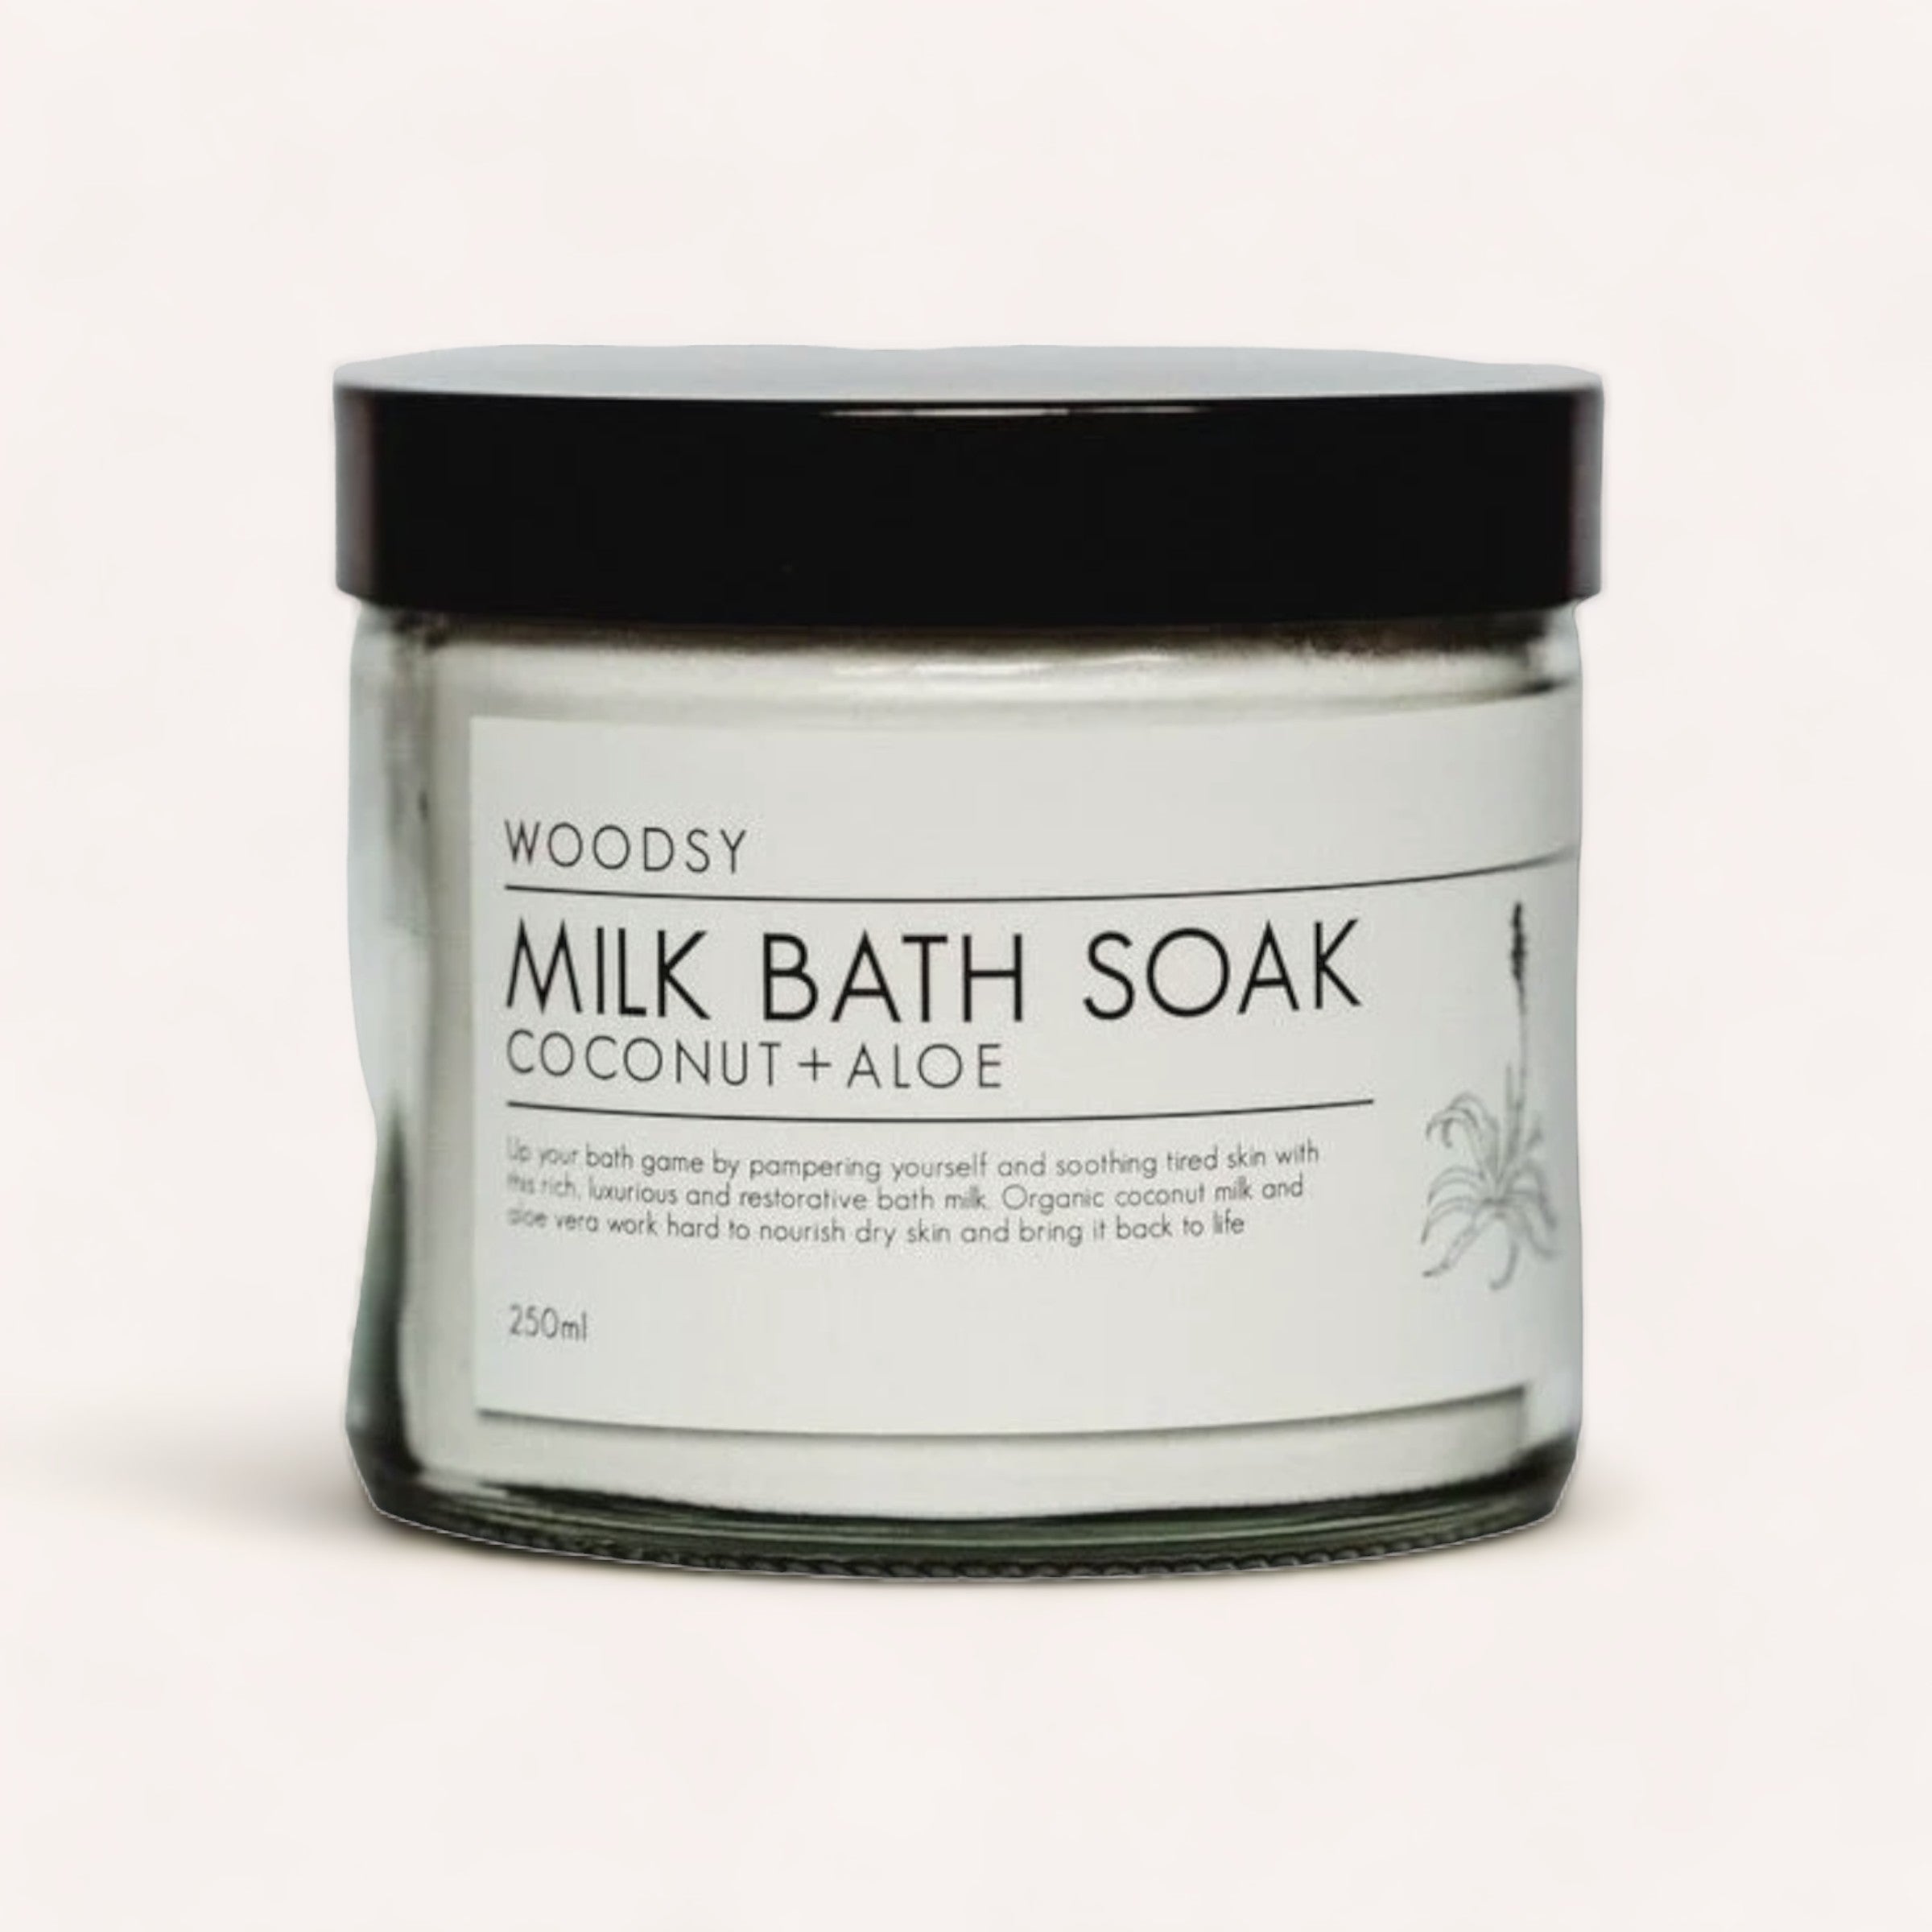 A jar of luxurious organic Milk Bath Soak - Coconut & Aloe by Woodsy Botanics against a neutral background.